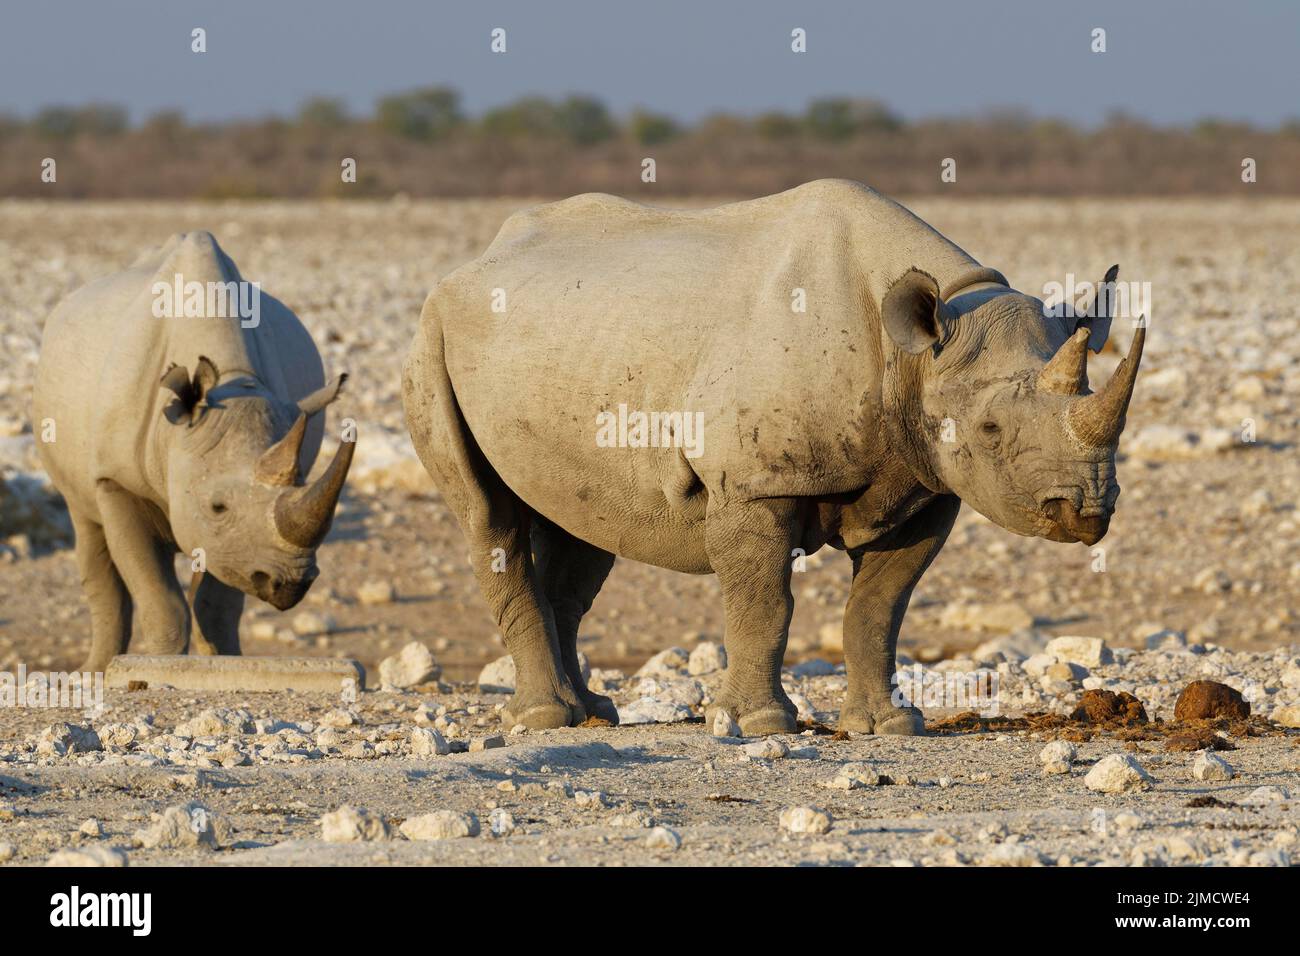 Black rhinoceroses (Diceros bicornis), two adults standing at waterhole, Etosha National Park, Namibia, Africa Stock Photo